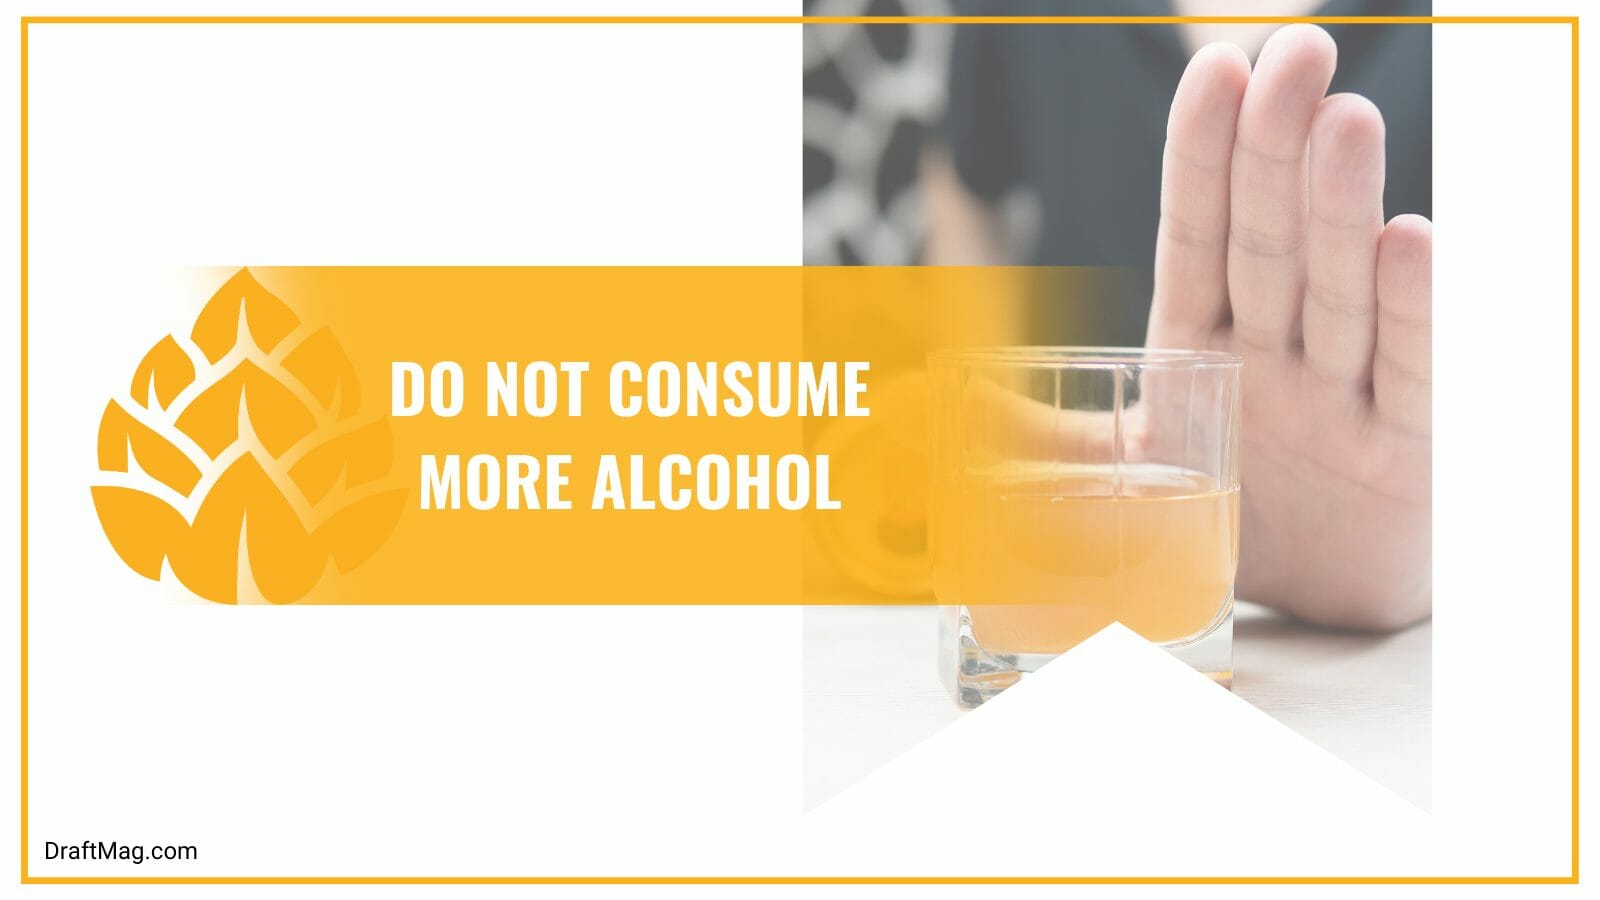 Do not consume more alcohol